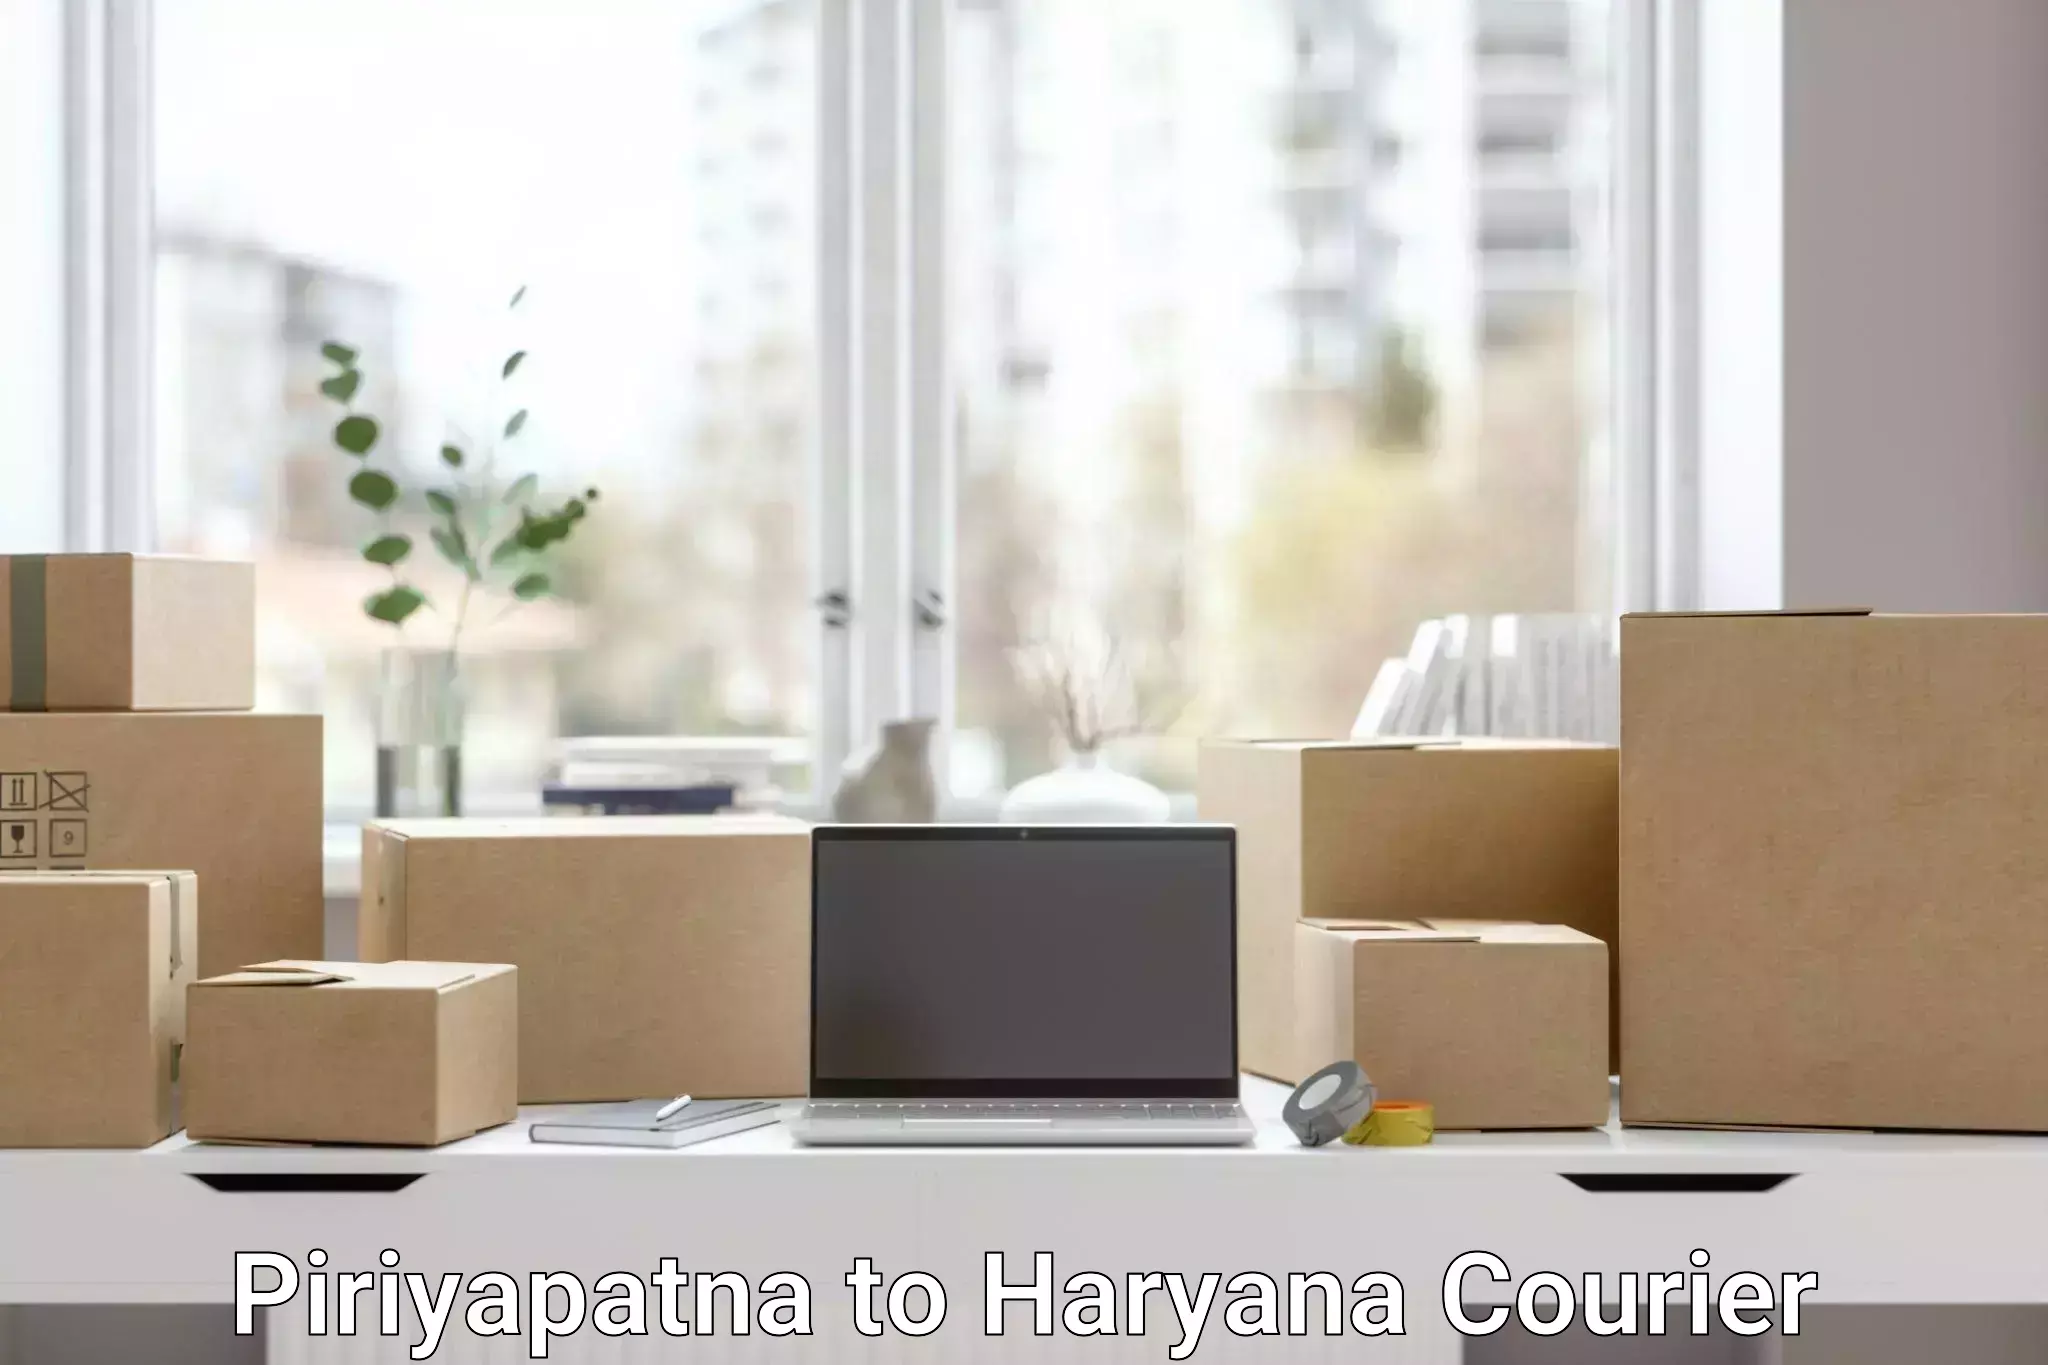 State-of-the-art courier technology Piriyapatna to Samalkha